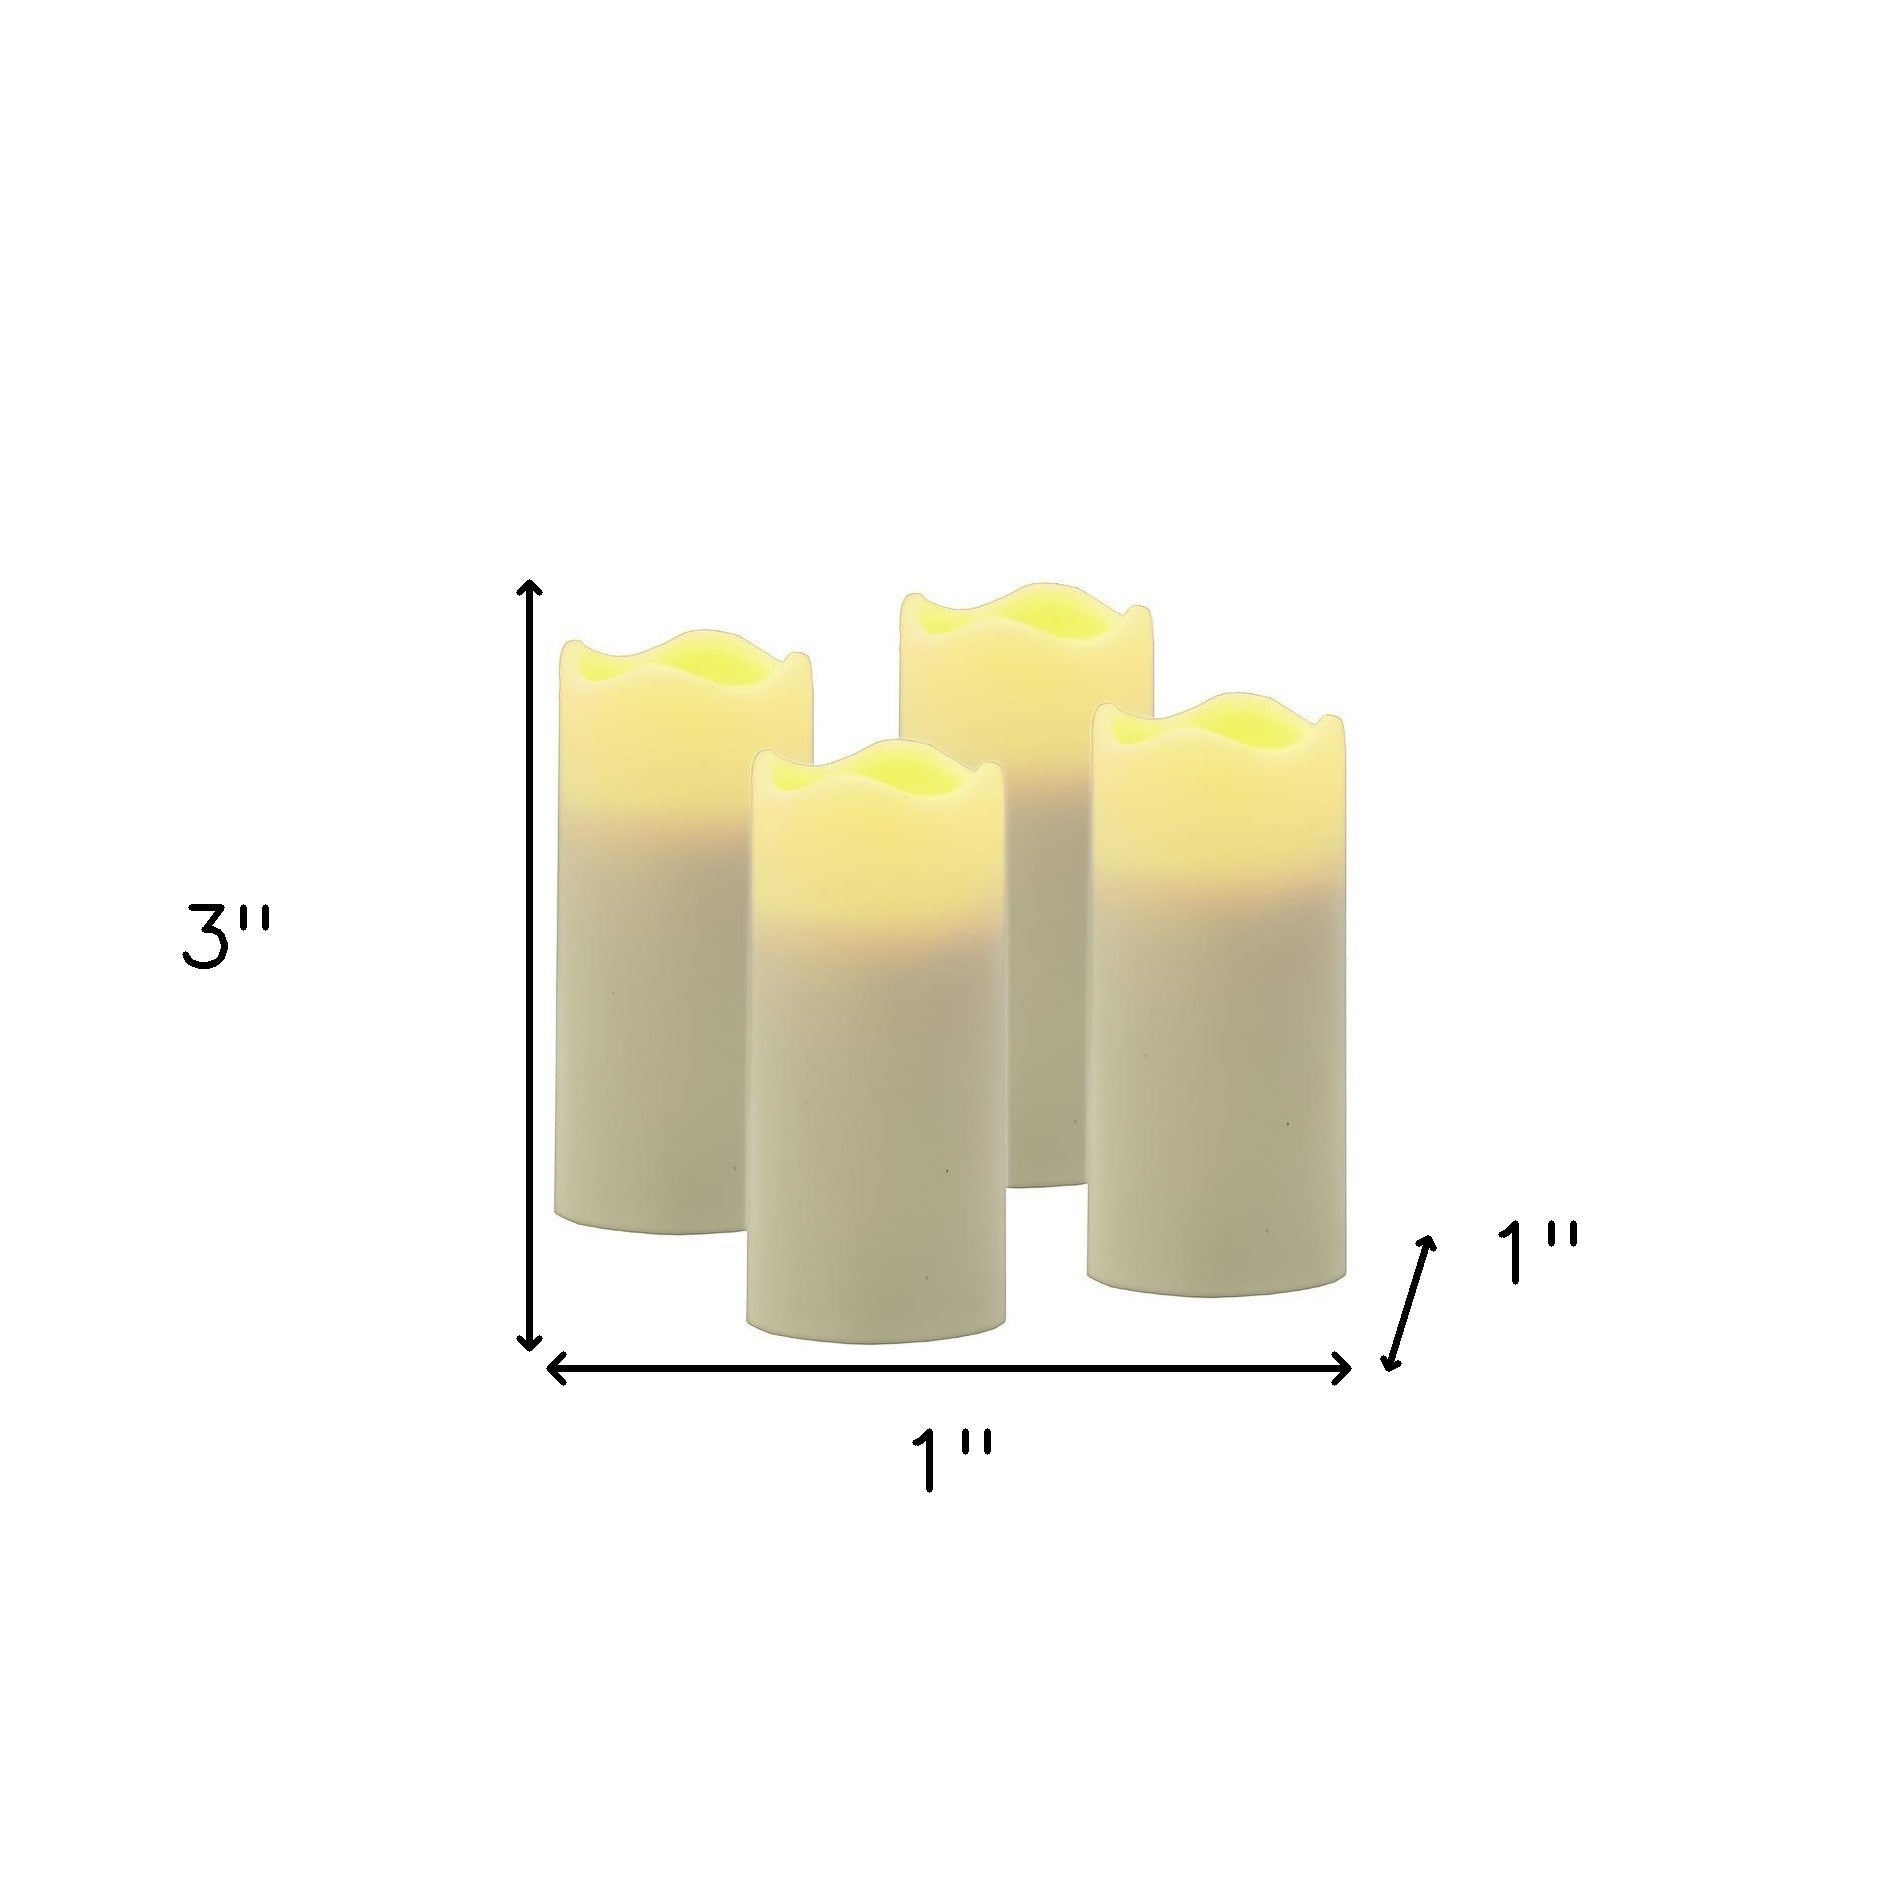 Set of Four Ivory Flameless Pillar Candles